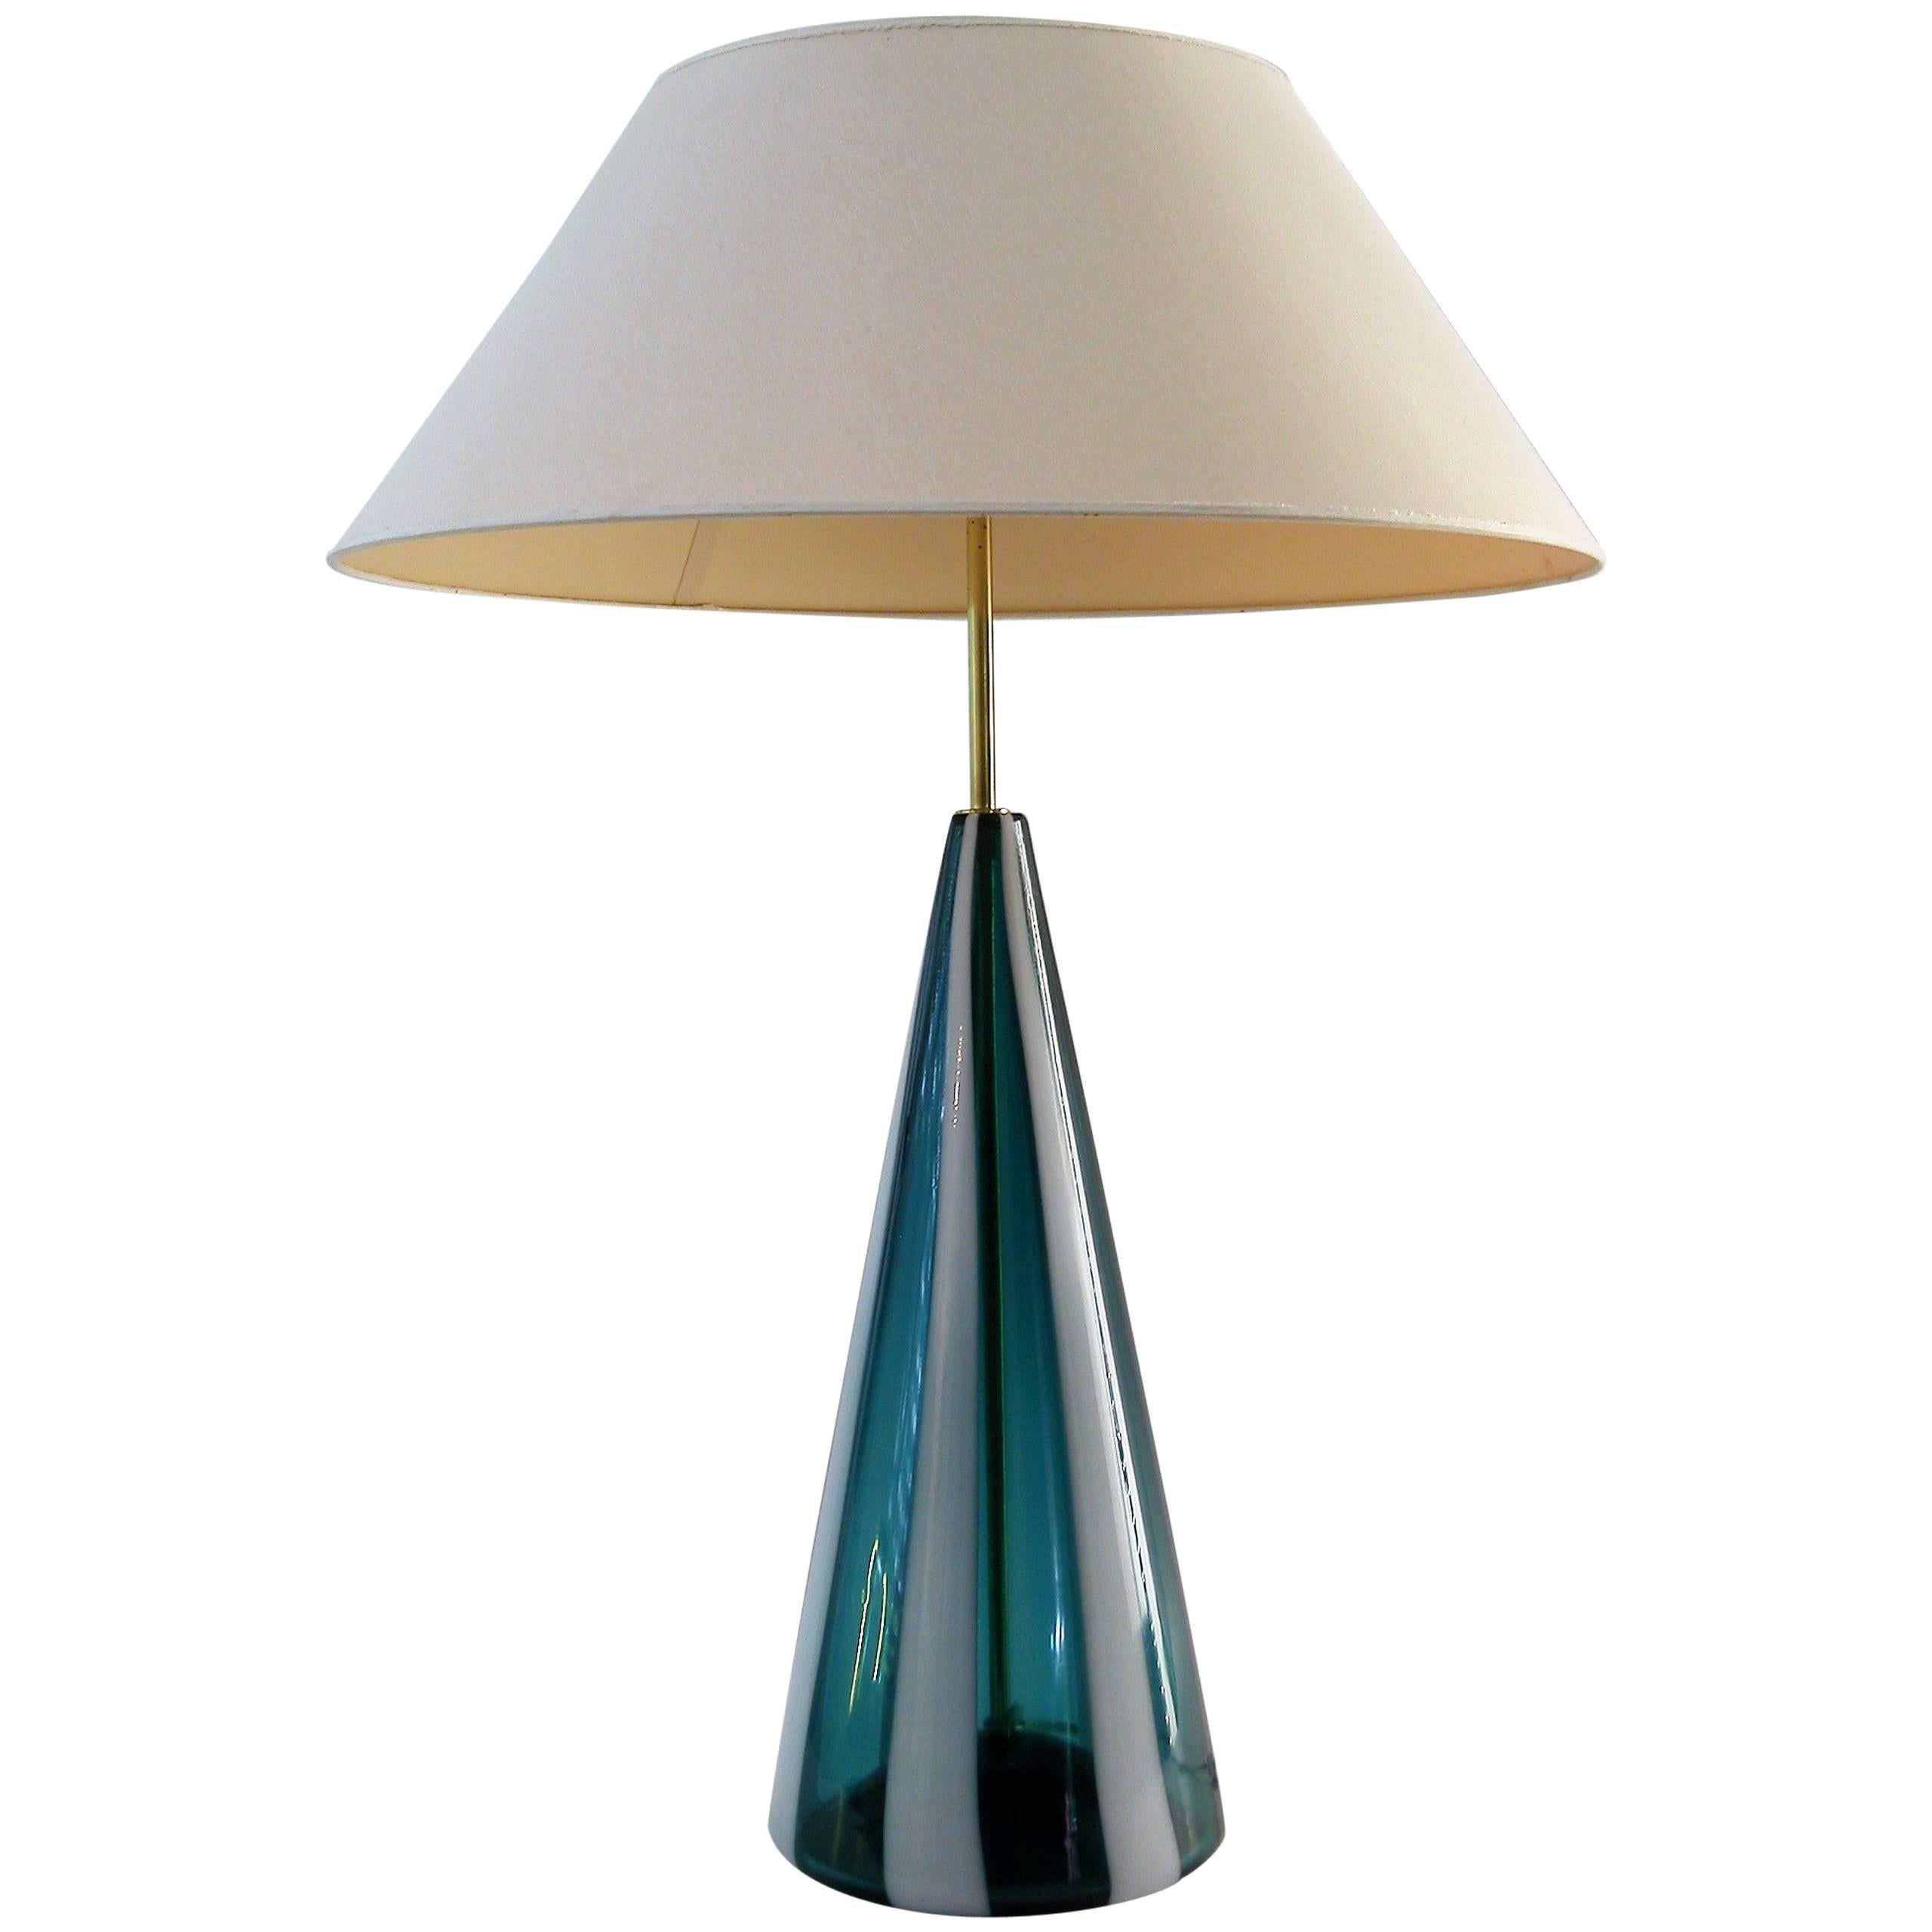 Mid-Century Fasce Verticali Lamp, style of Fulvio Bianconi for Venini, 1960s For Sale